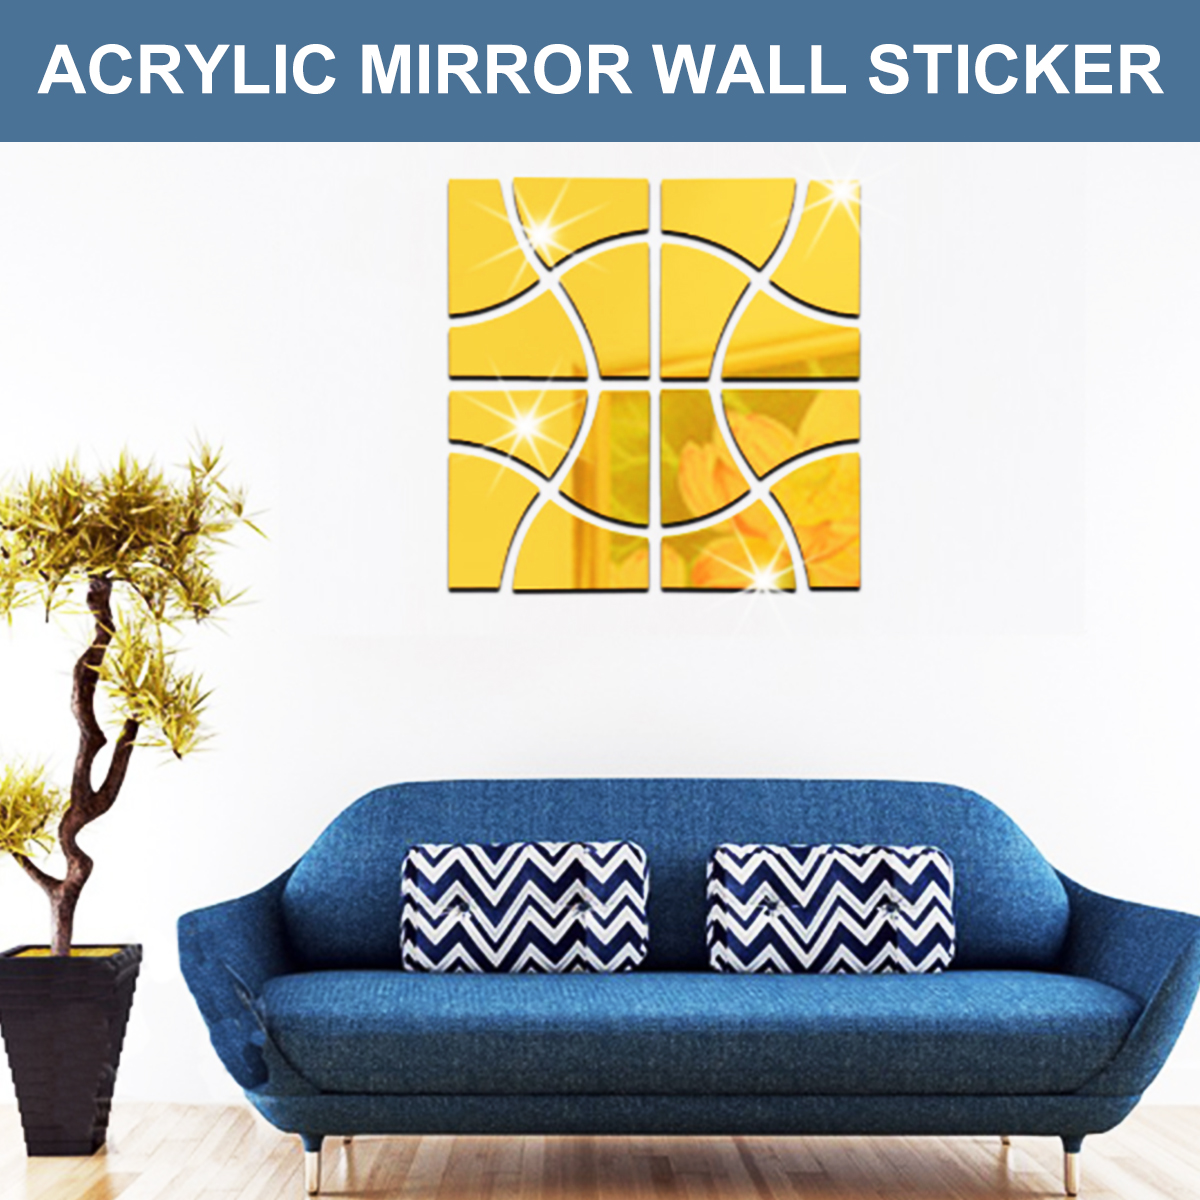 16Pcs-3D-Acrylic-Removable-Modern-Mirror-Decal-Art-Mural-Wall-Sticker-Home-Room-Decor-DIY-1823142-2